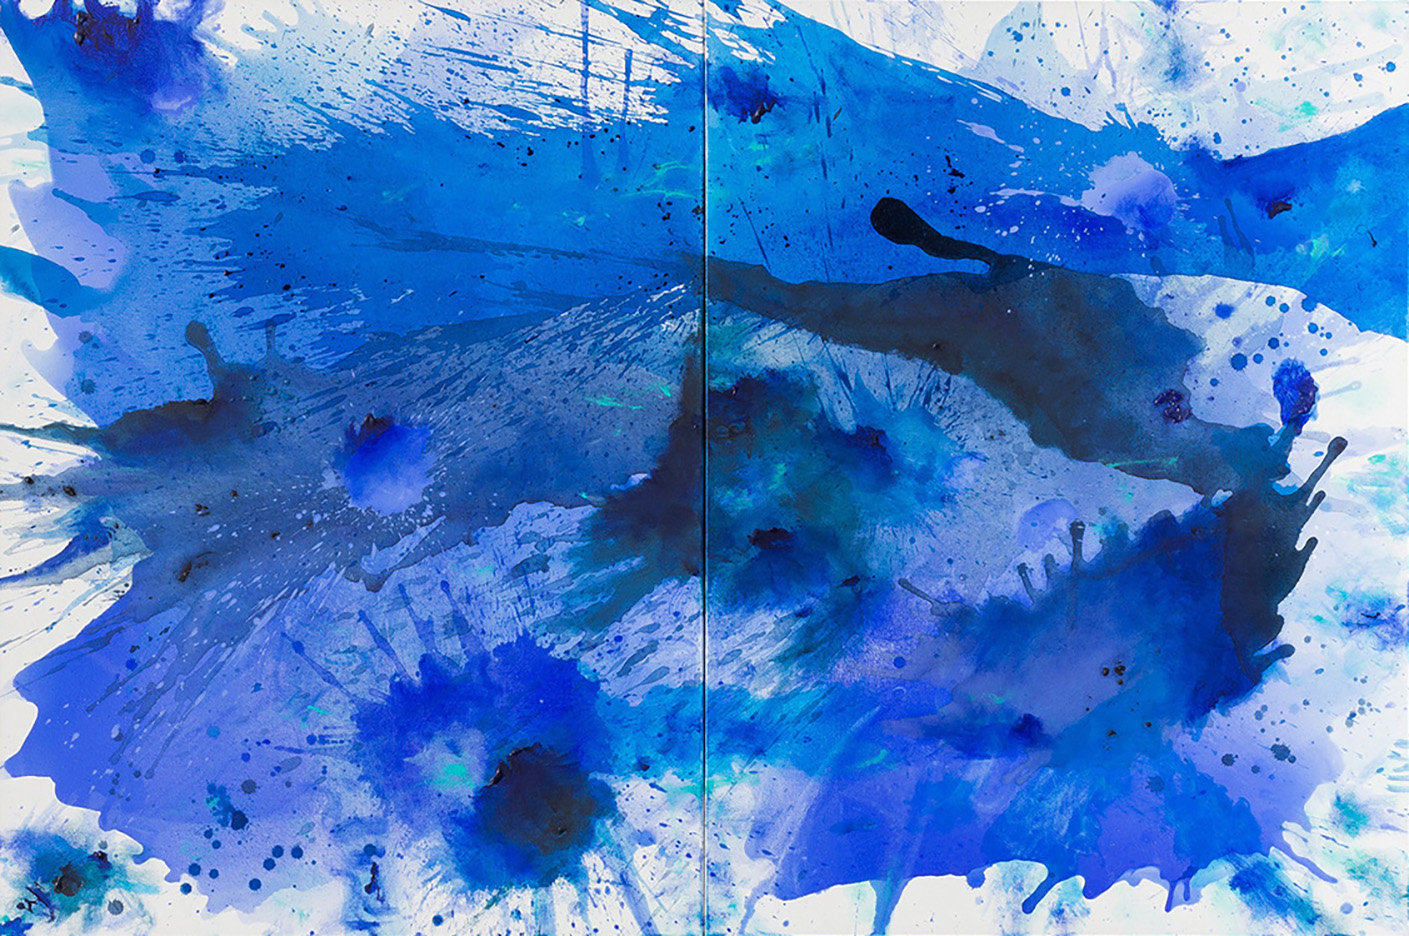 BlueLand-Splash, 2015

Acrylic on canvas

48 x 72 inches

Purchase